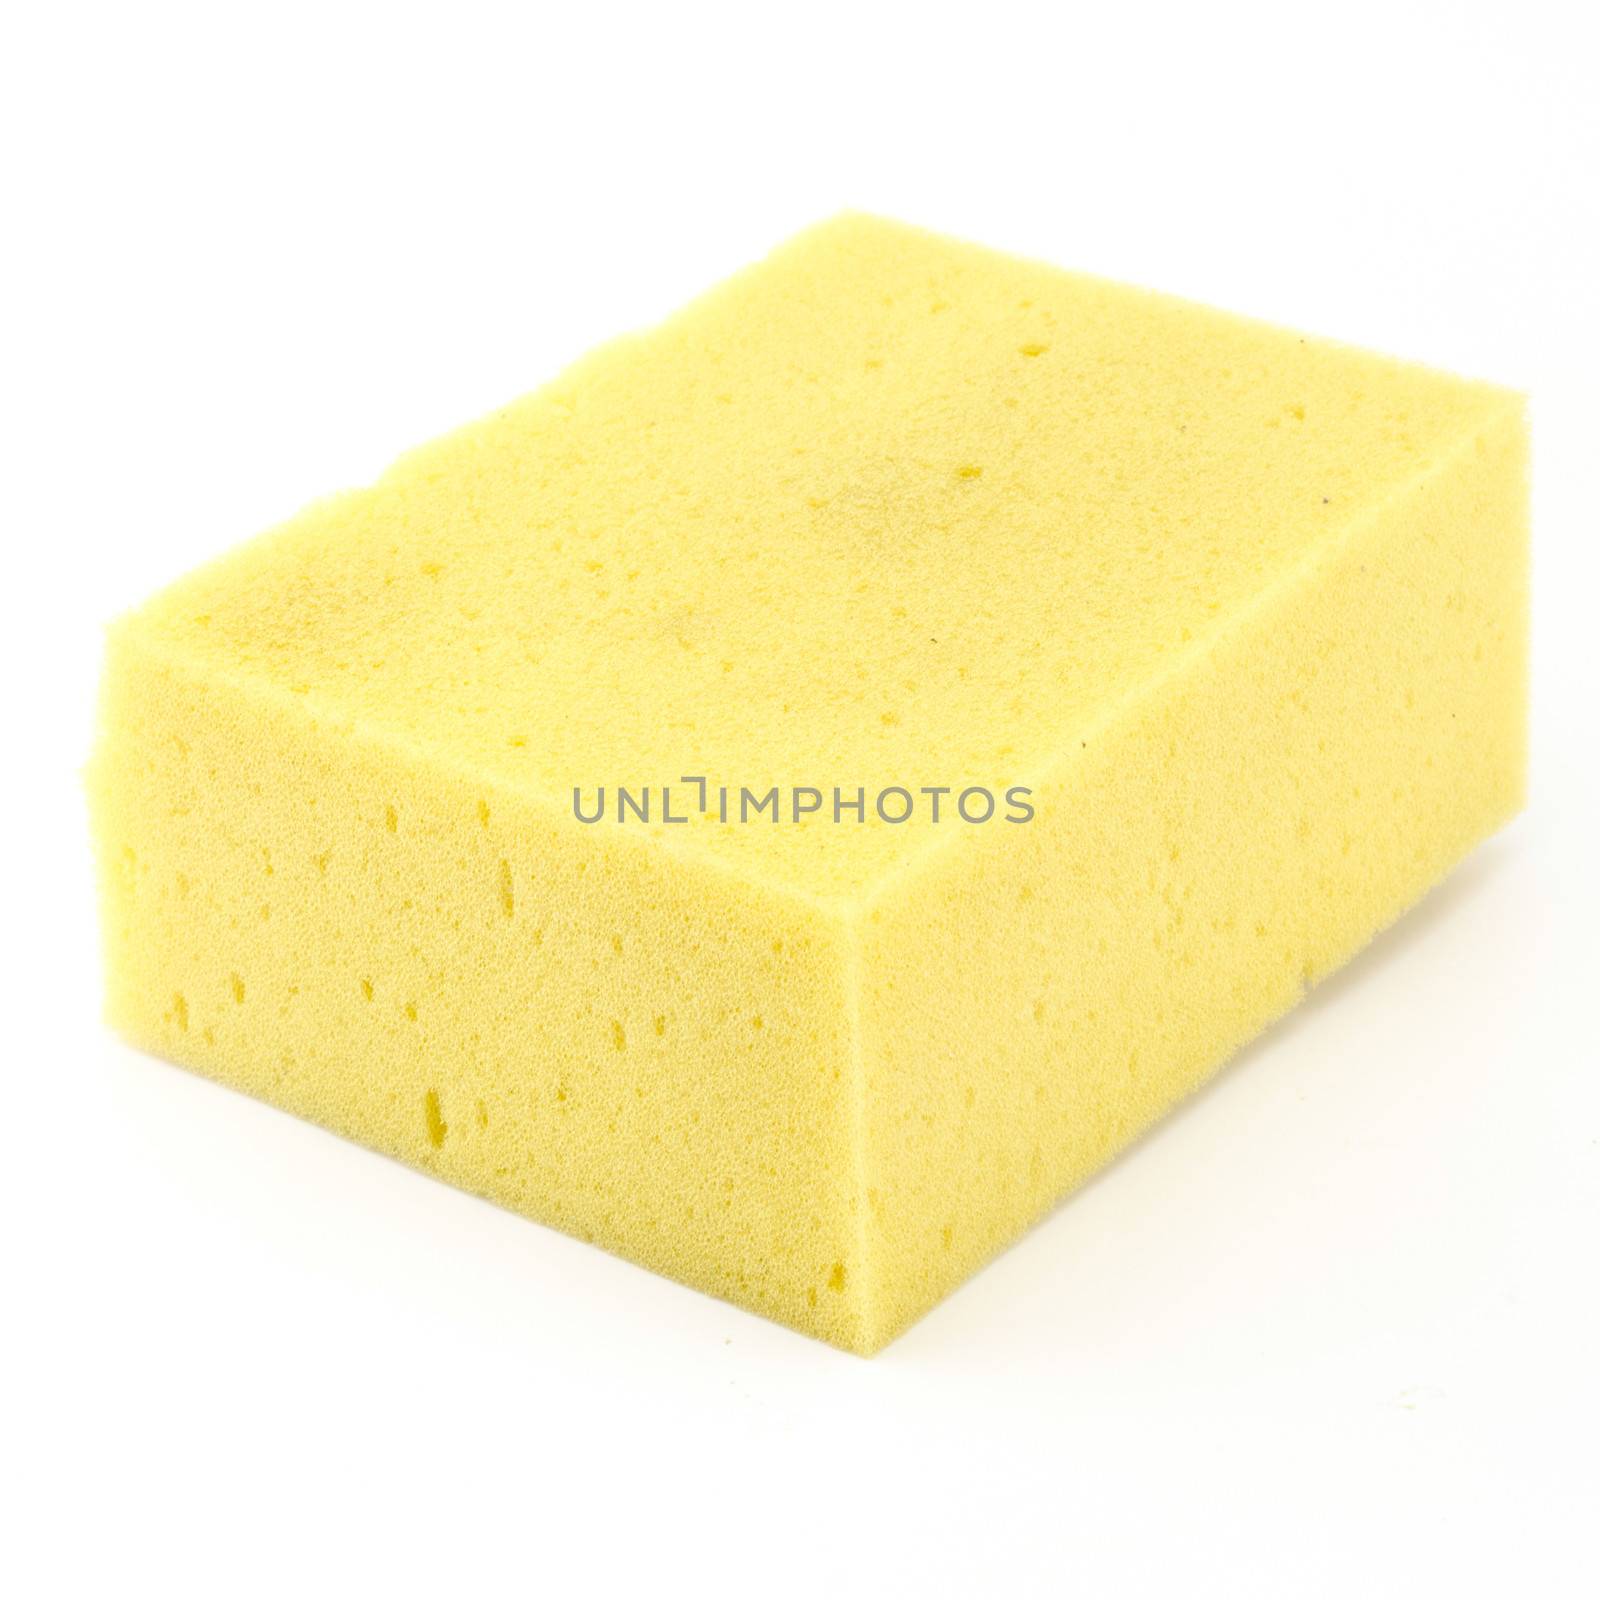 yellow household sponge isolated on white background